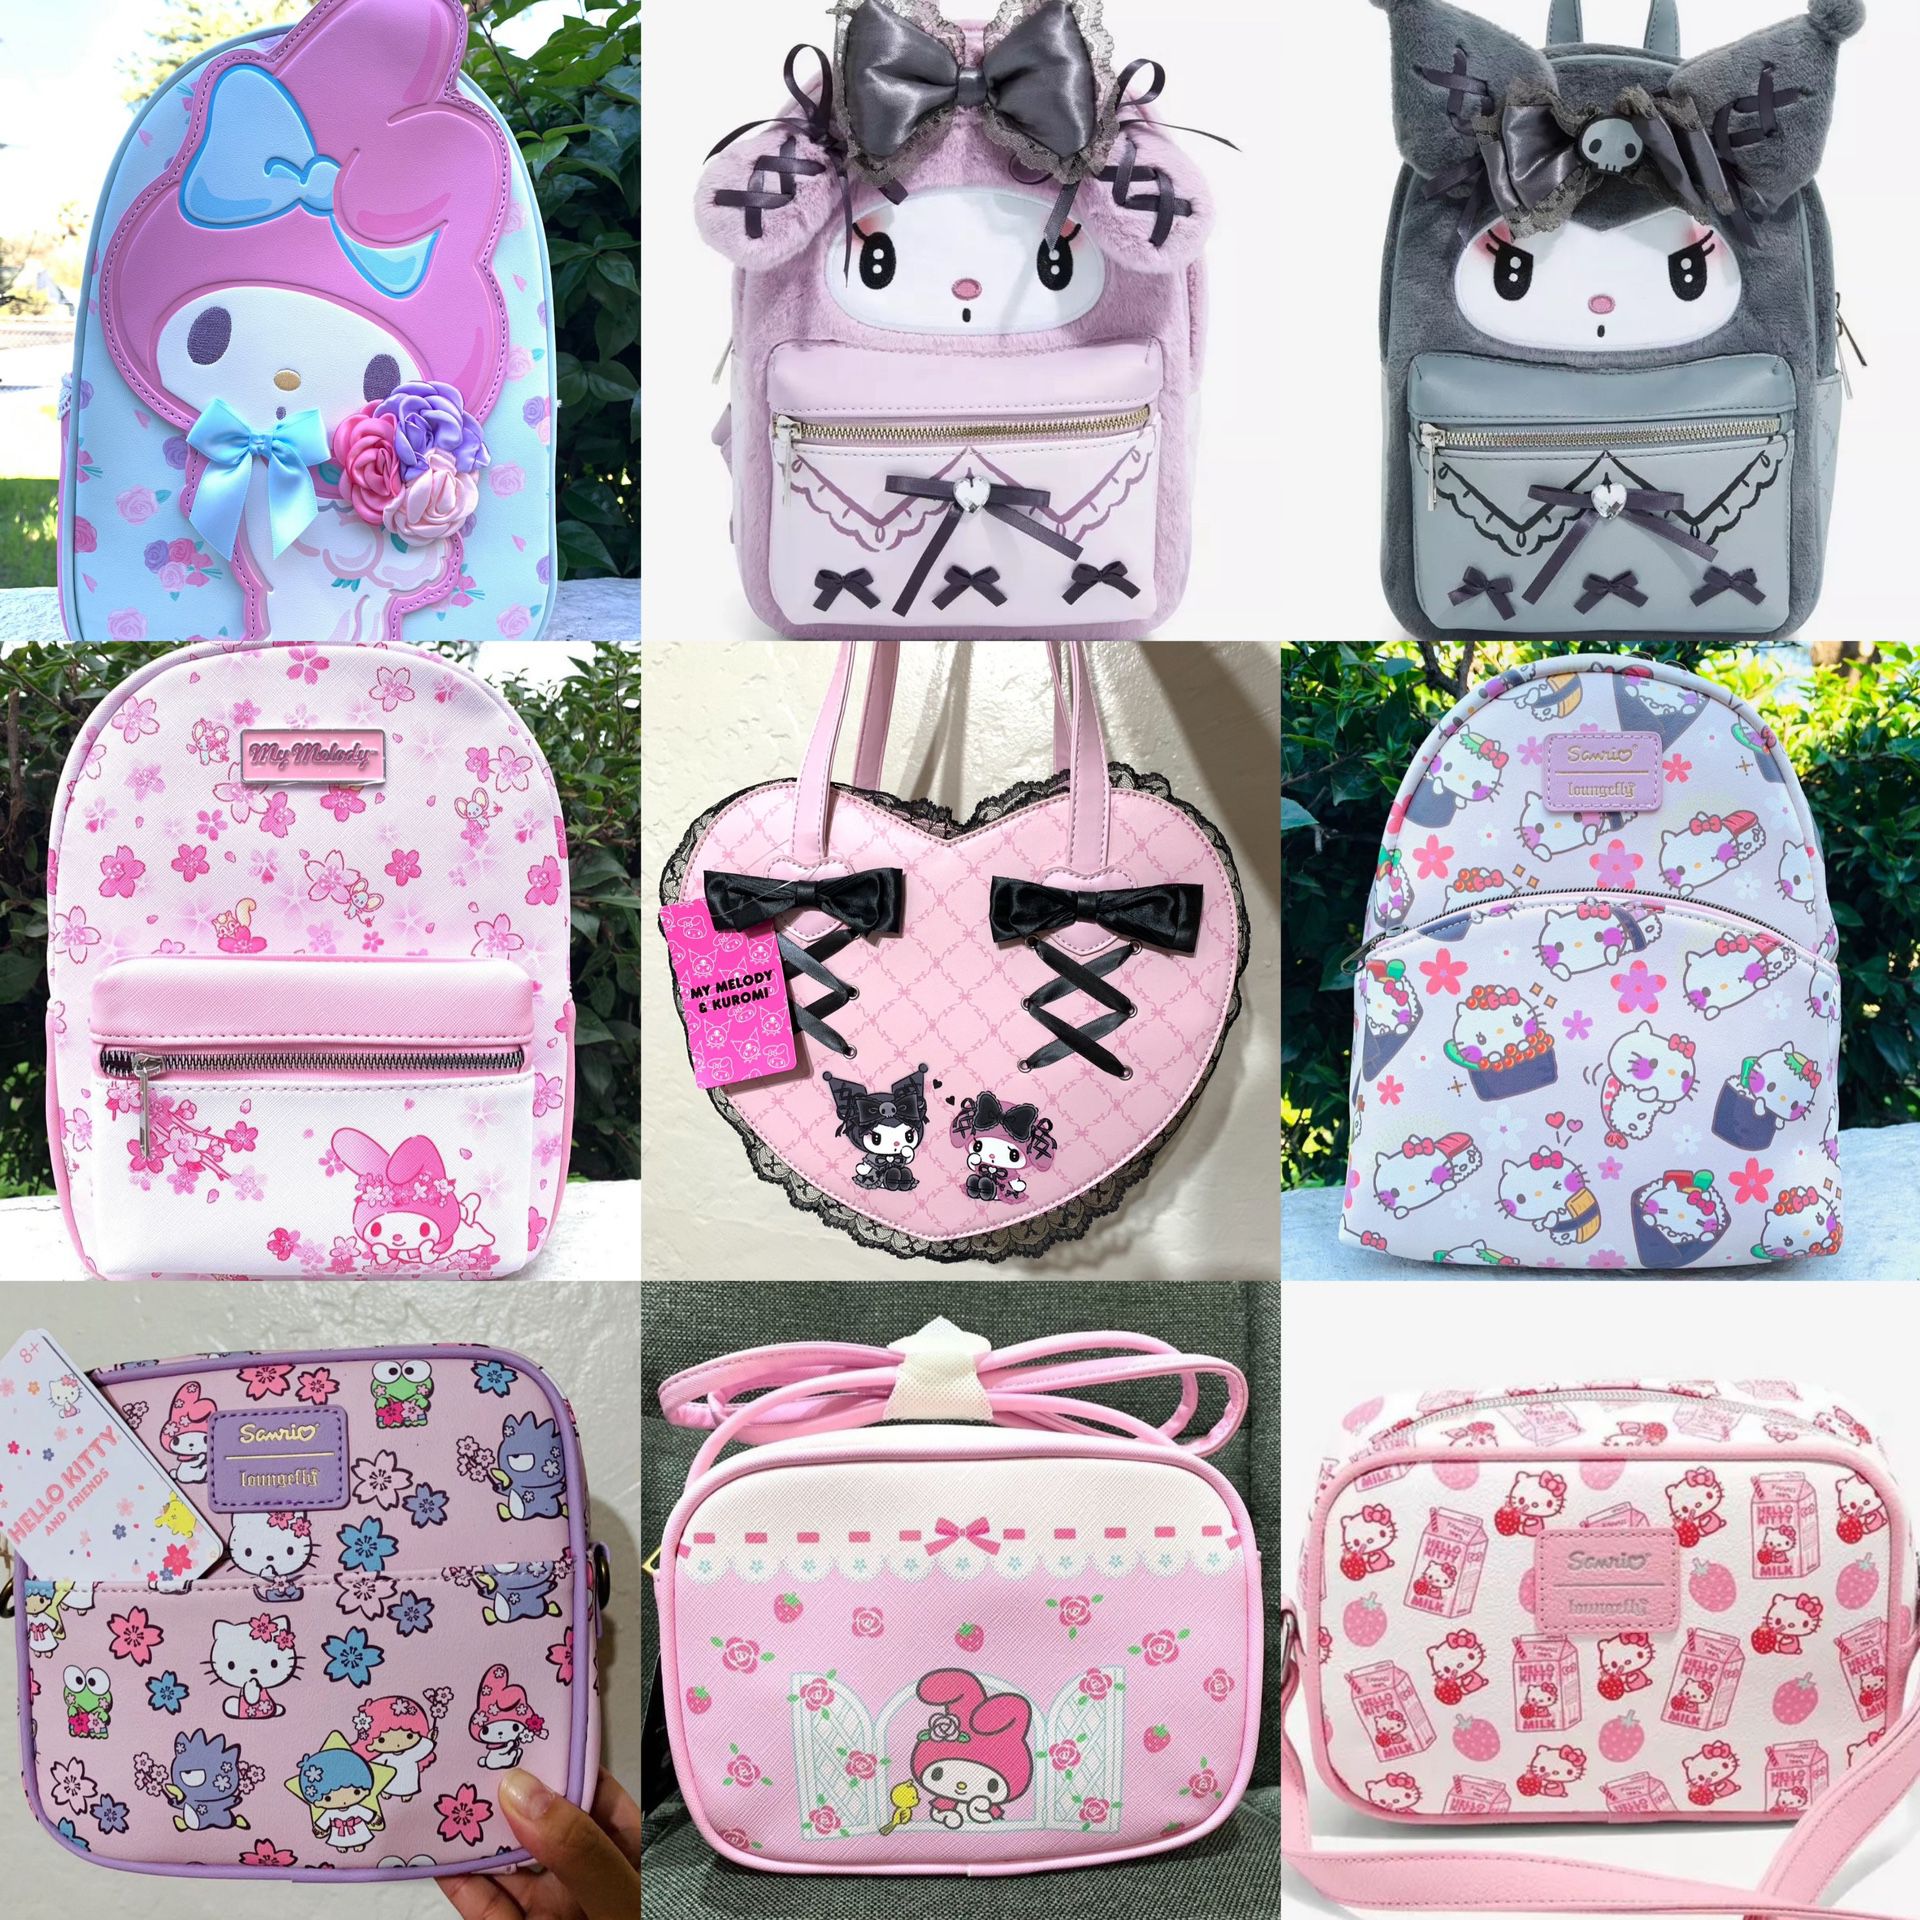 $50 Each ❤️ All NWT Sanrio My Melody Kuromi Hello Kitty Backpack And Crossbody Bag 